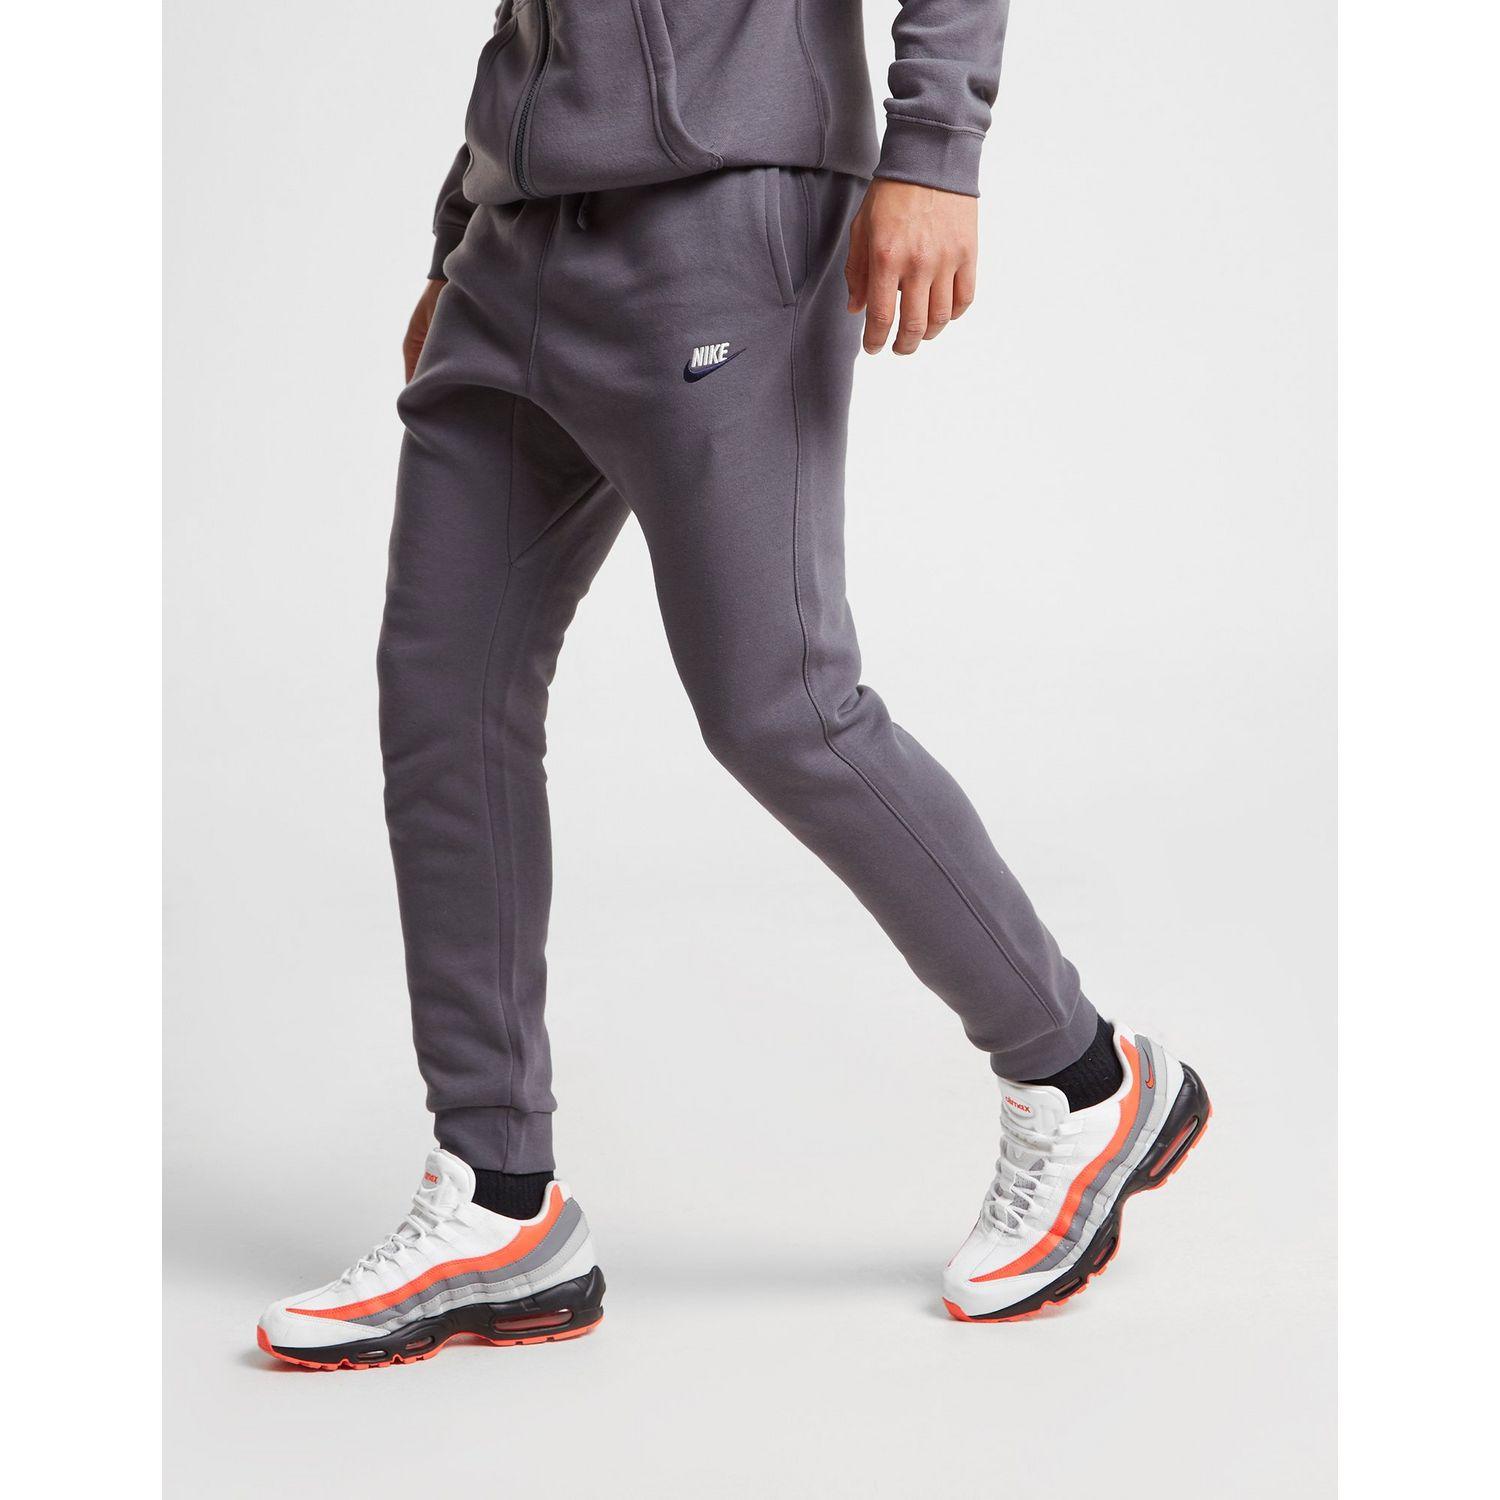 Nike Foundation Cuffed Fleece Pants Grey Flash Sales, SAVE 31% - mpgc.net